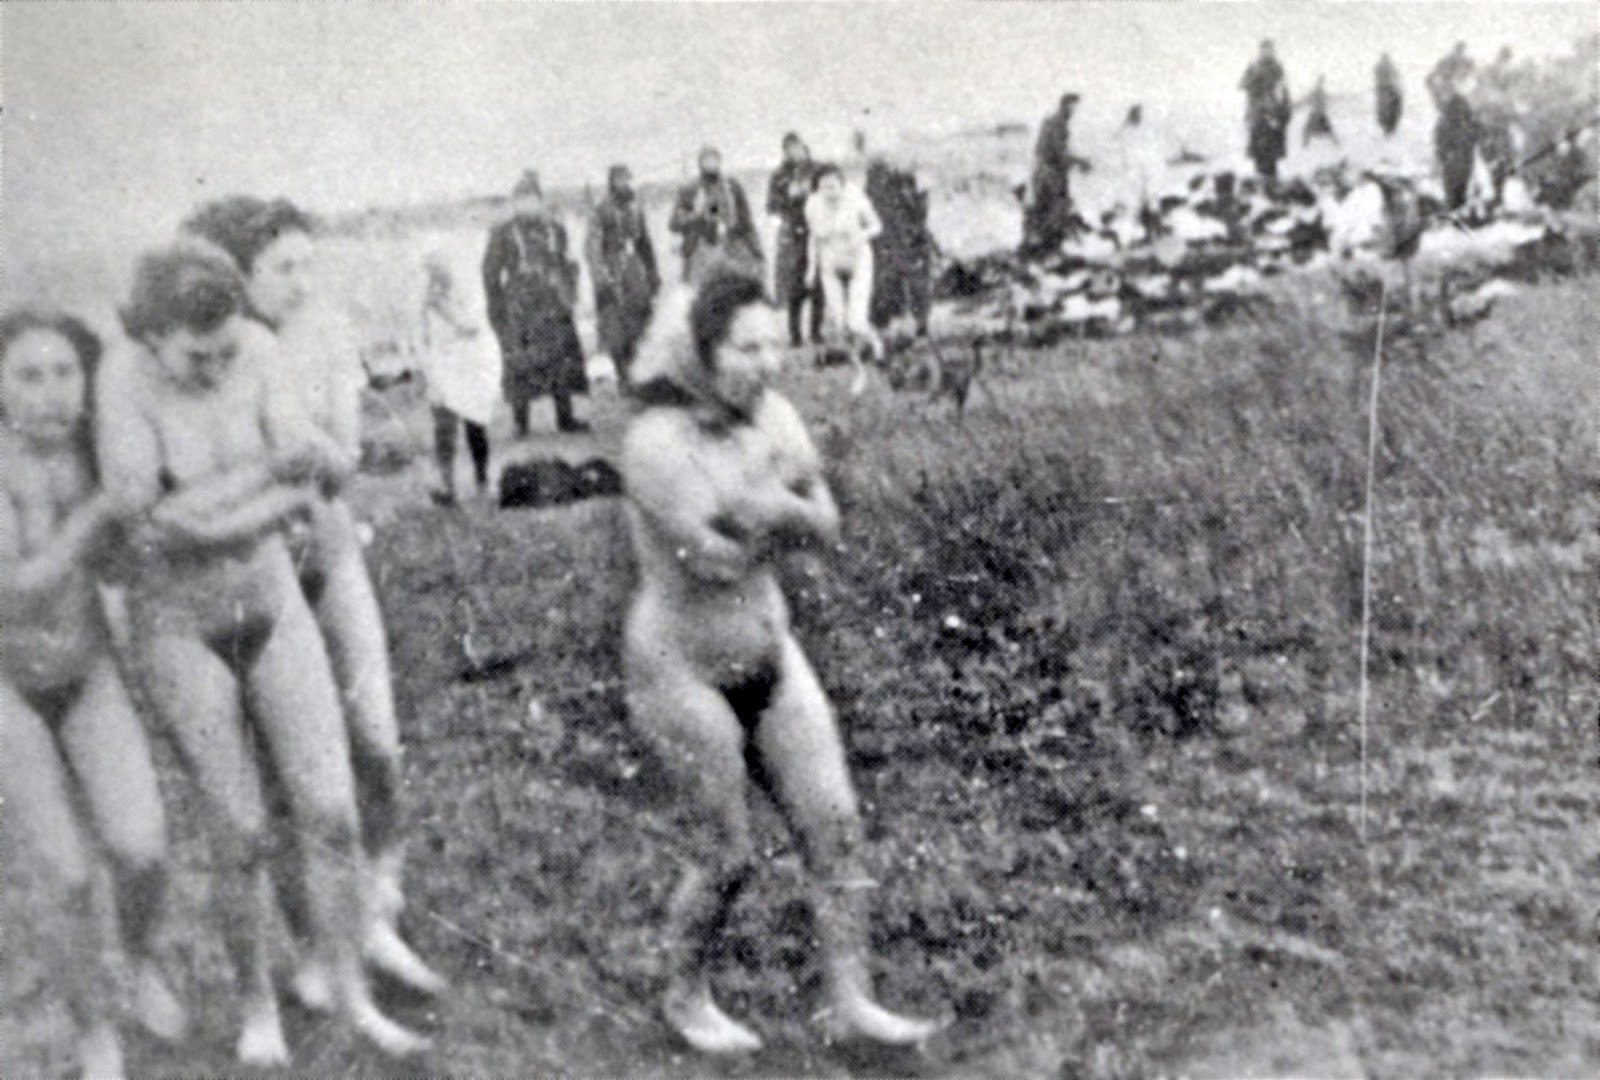 Nude World - Nude world war 2 exploited movies